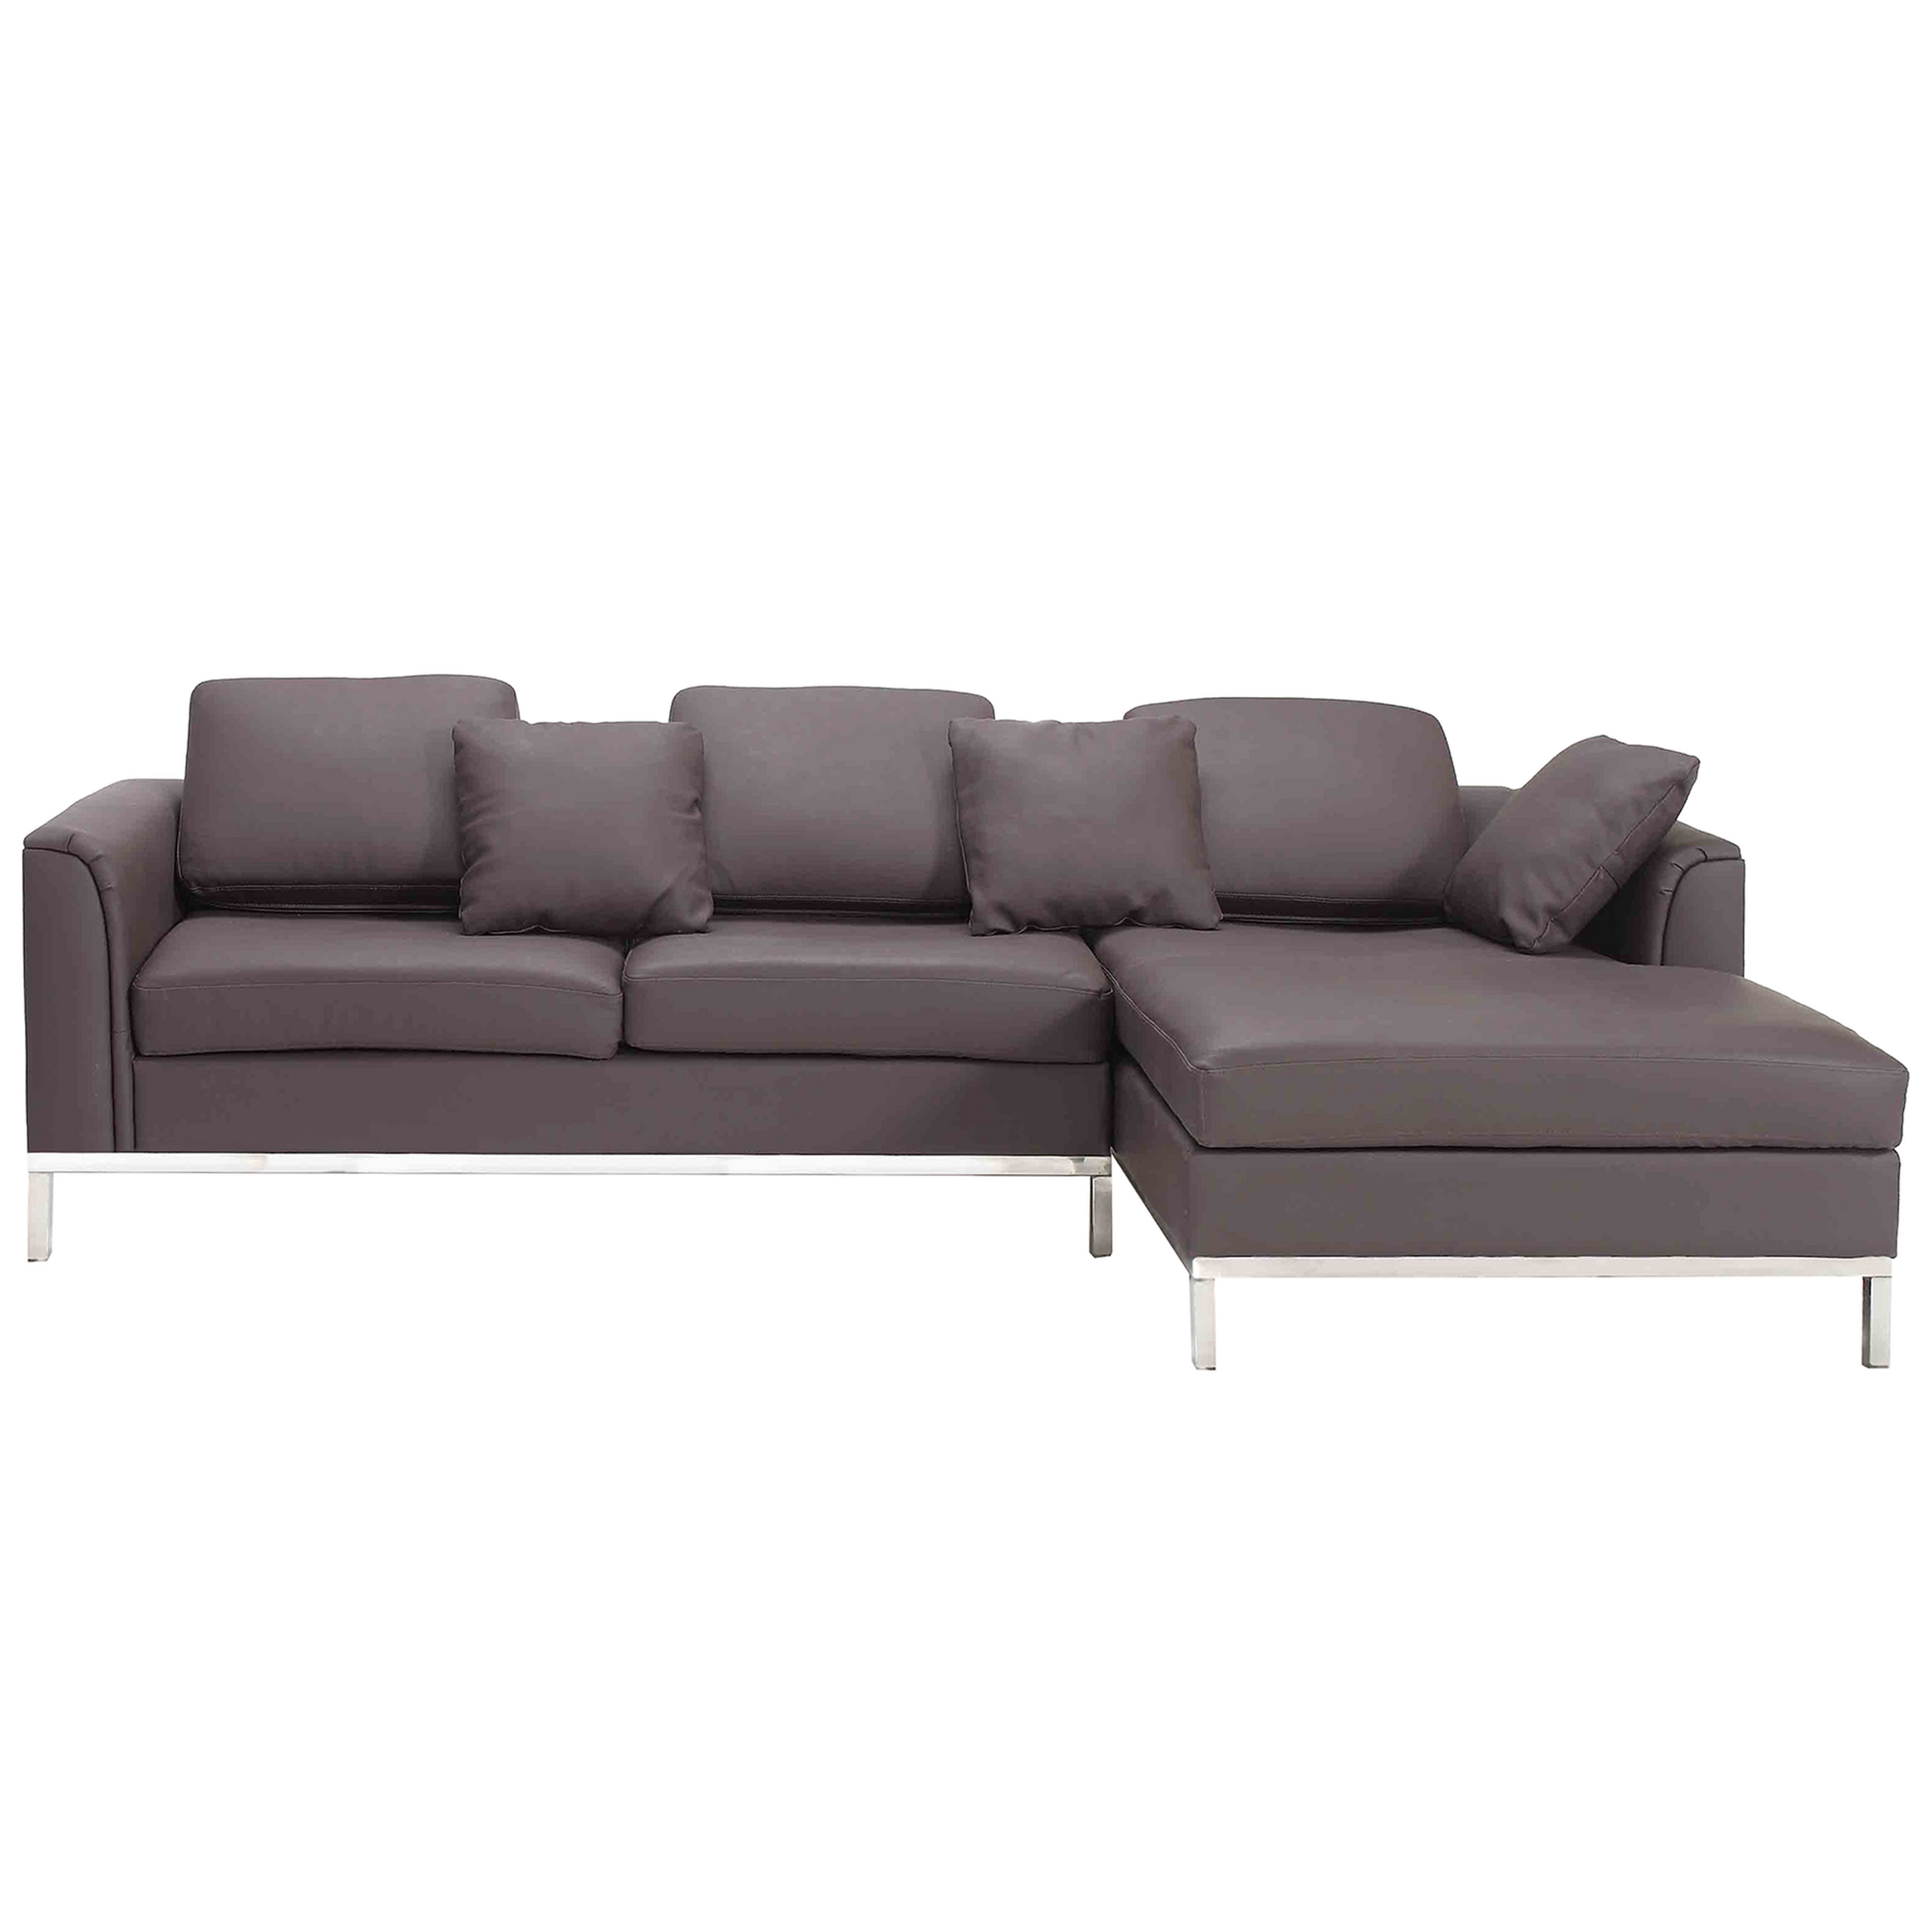 Beliani Corner Sofa Brown Leather Upholstered L-shaped Left Hand Orientation